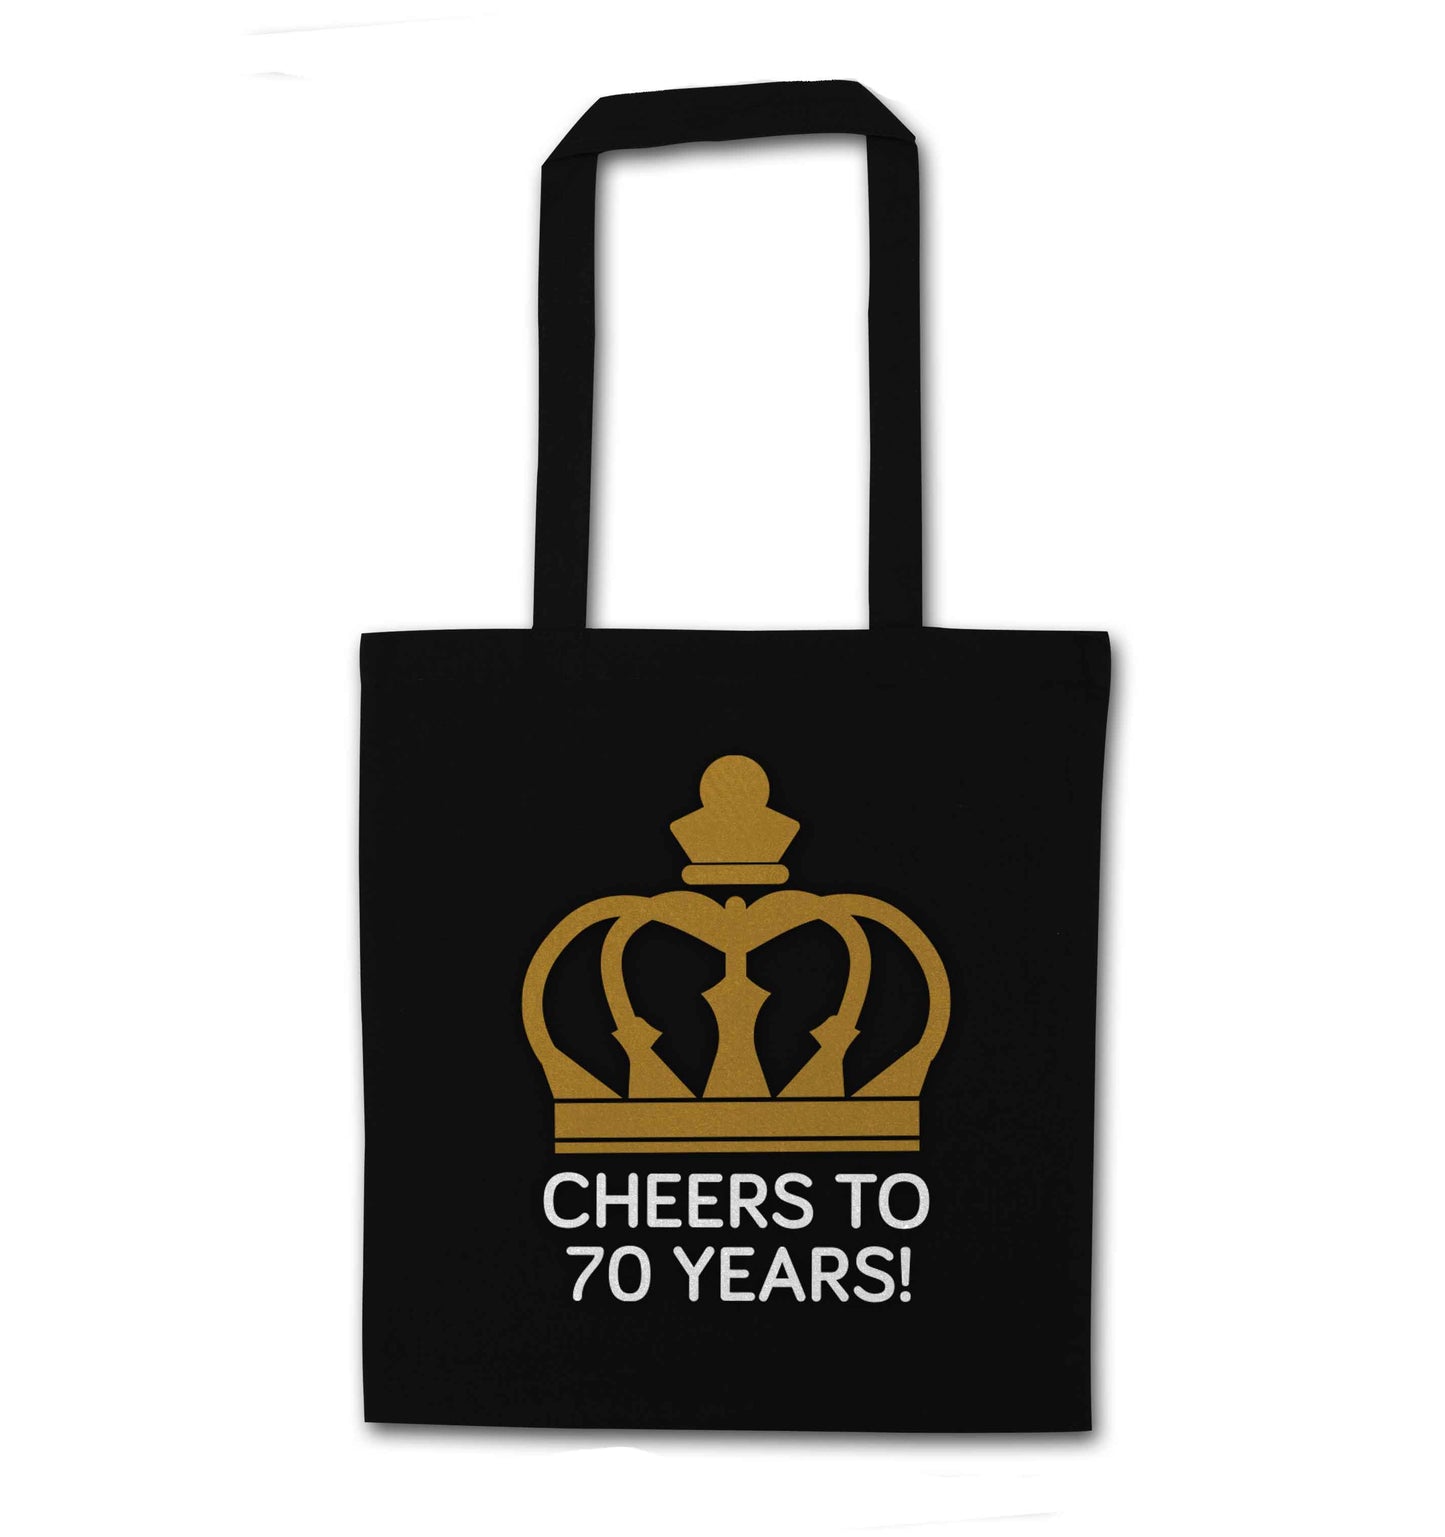 Cheers to 70 years! black tote bag